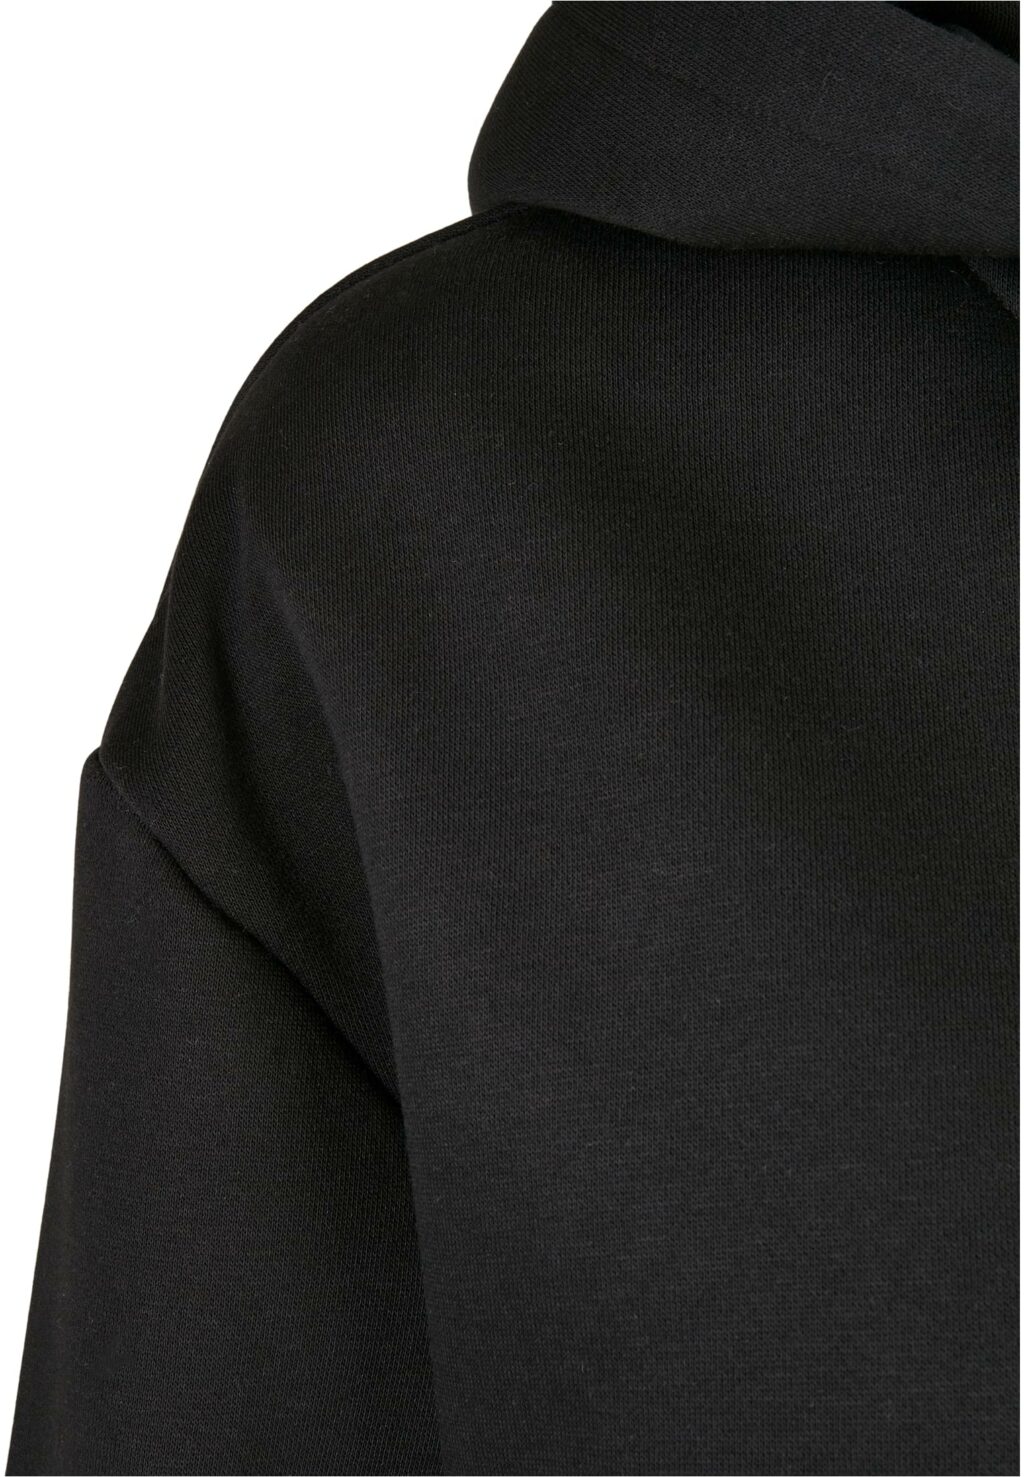 Urban Classics Ladies Short Oversized Zip Jacket black TB4766